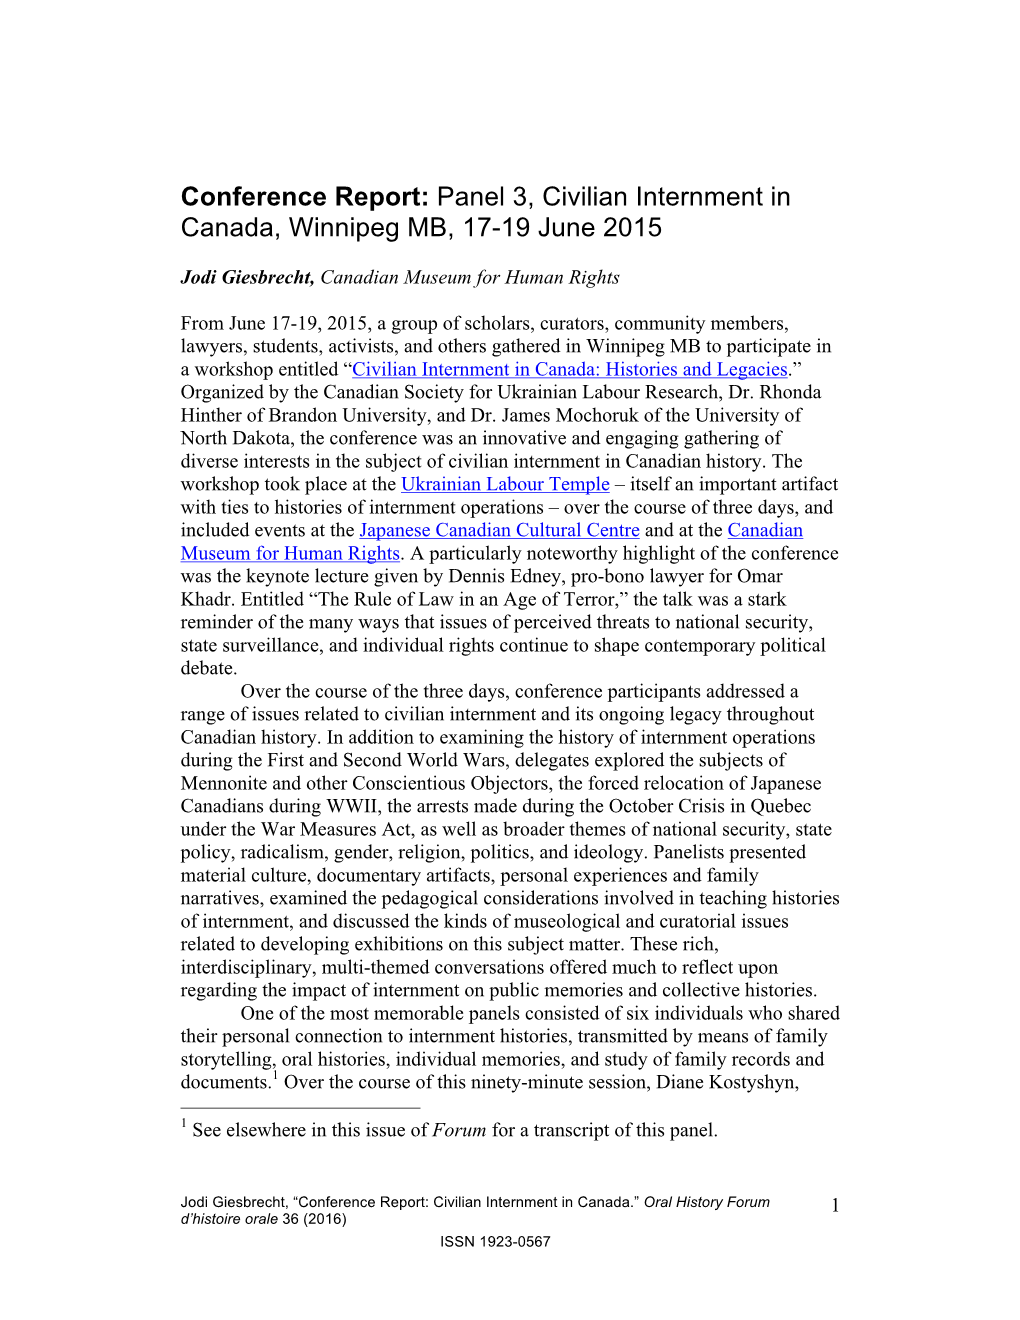 Conference Report: Panel 3, Civilian Internment in Canada, Winnipeg MB, 17-19 June 2015